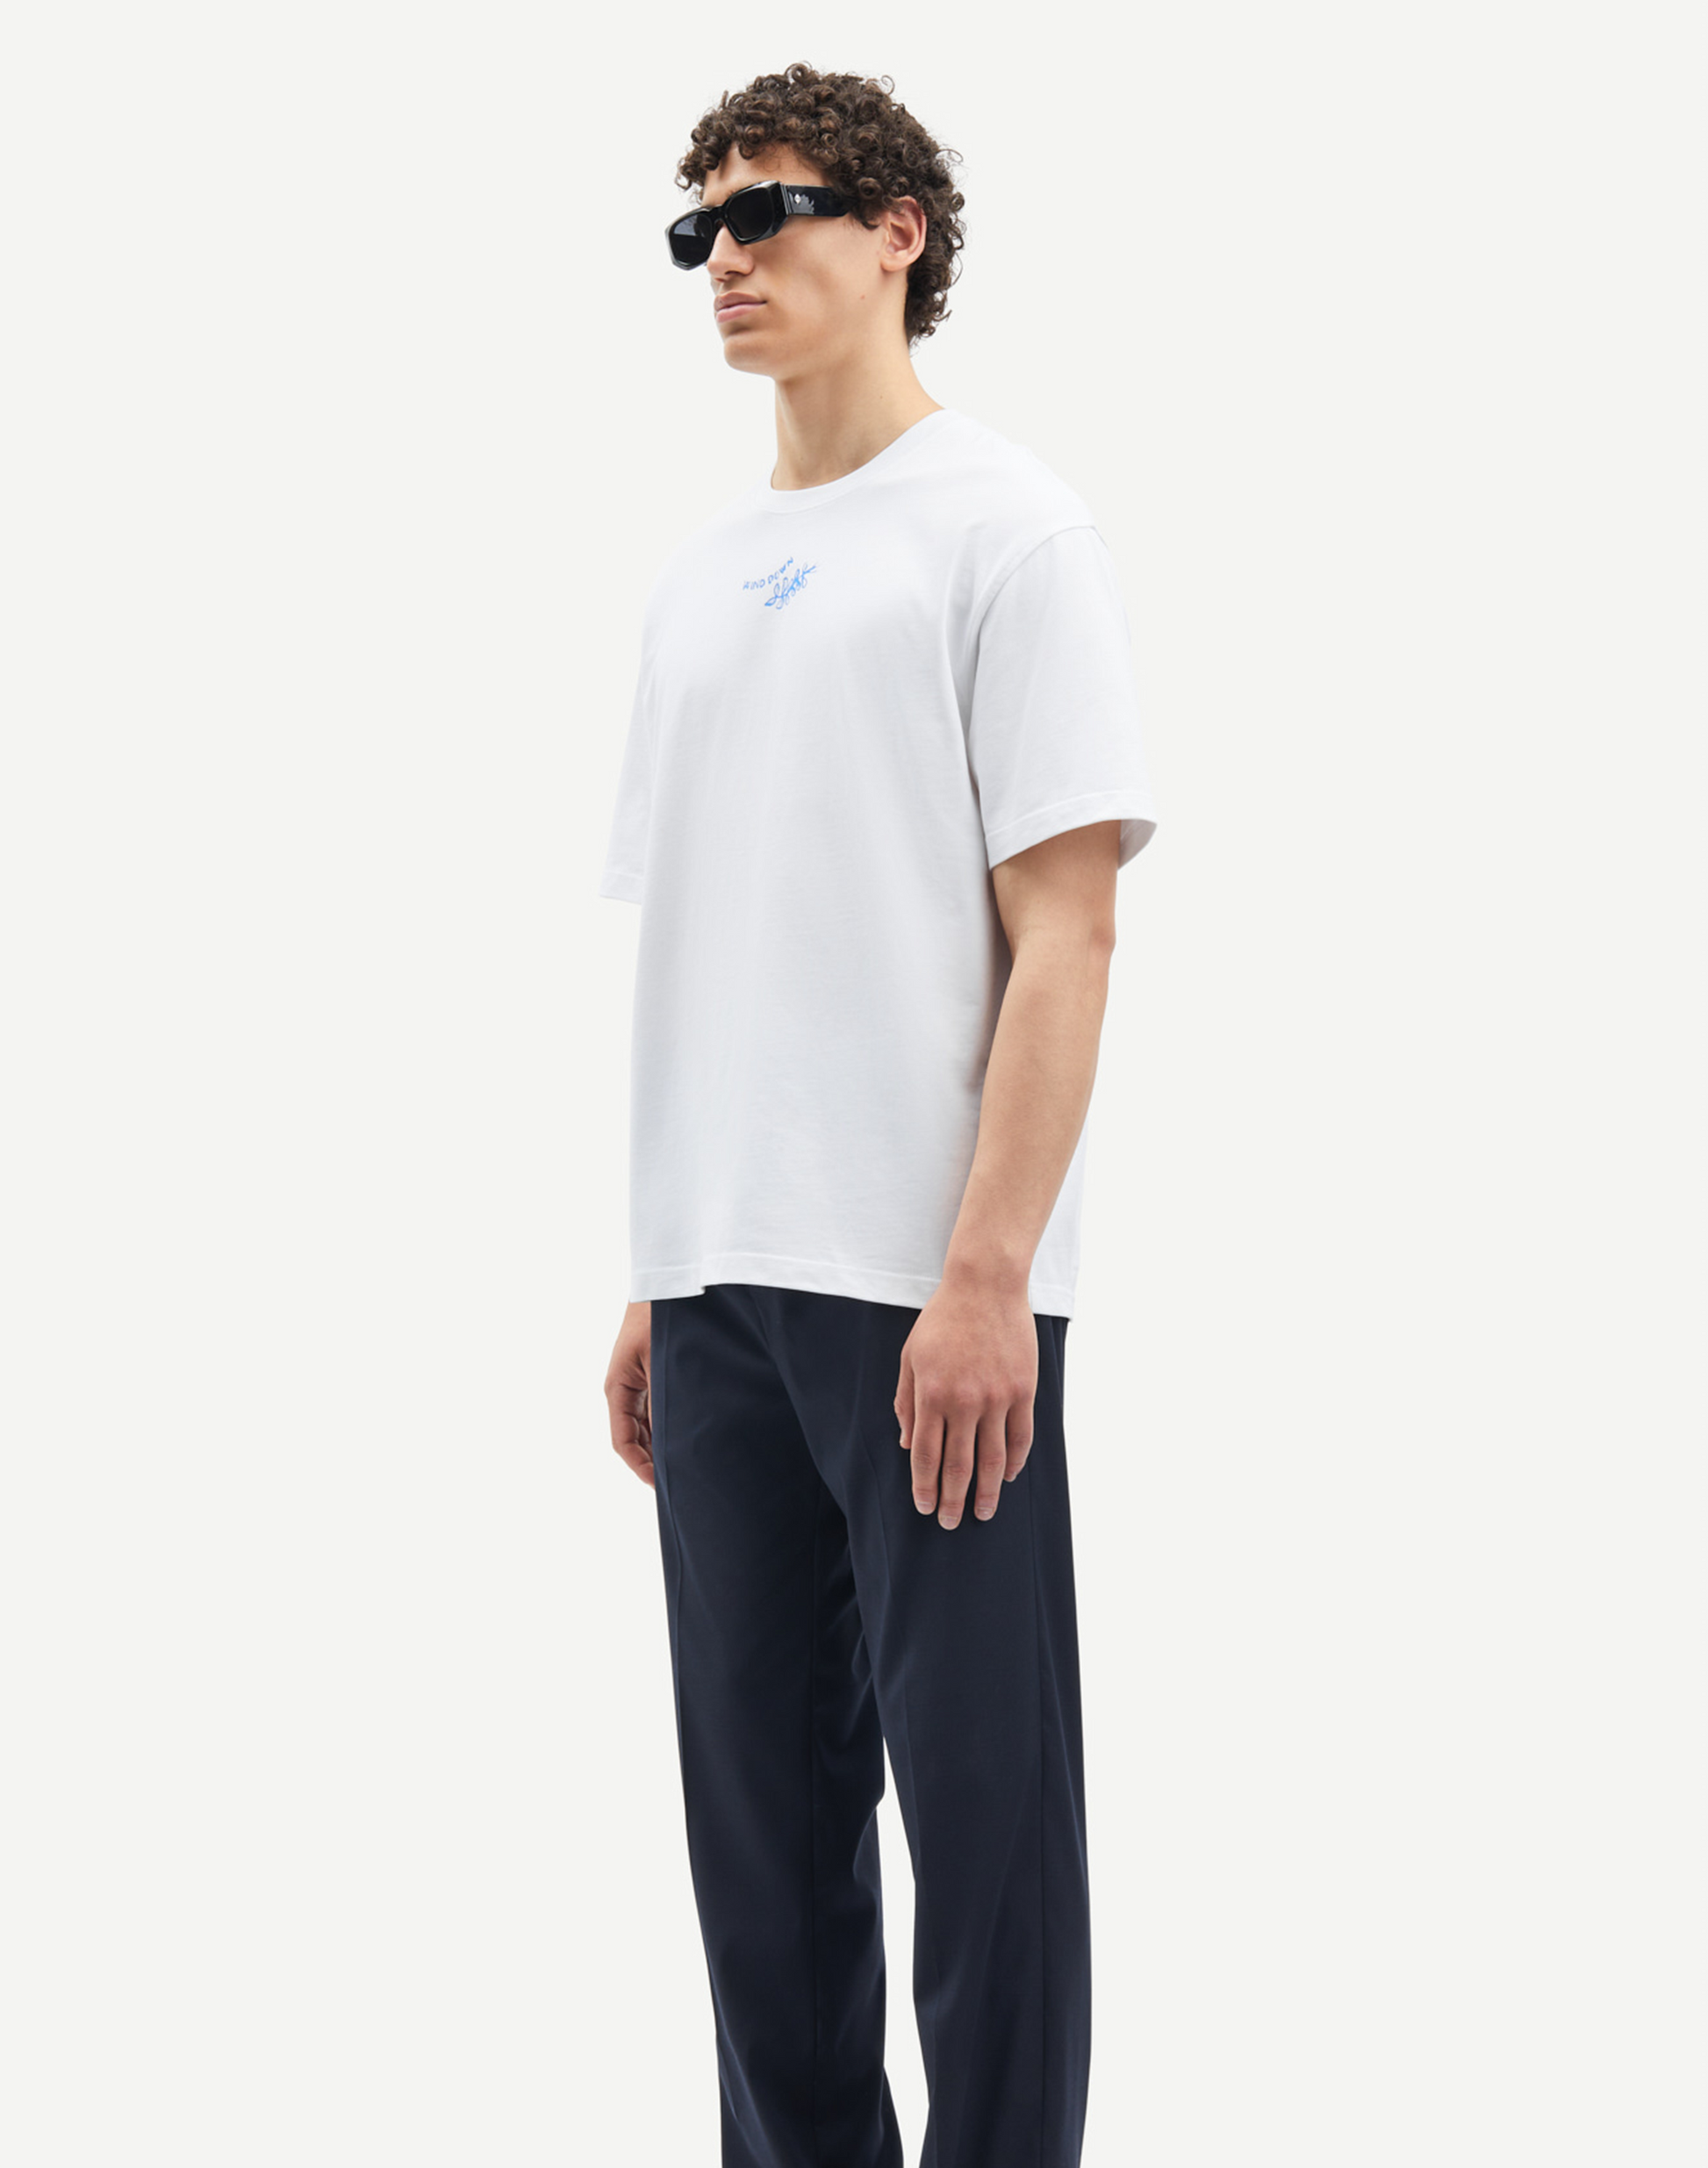 SAMSOE SAMSOE Sawind T-Shirt in Weiß, Tragebild Frontal